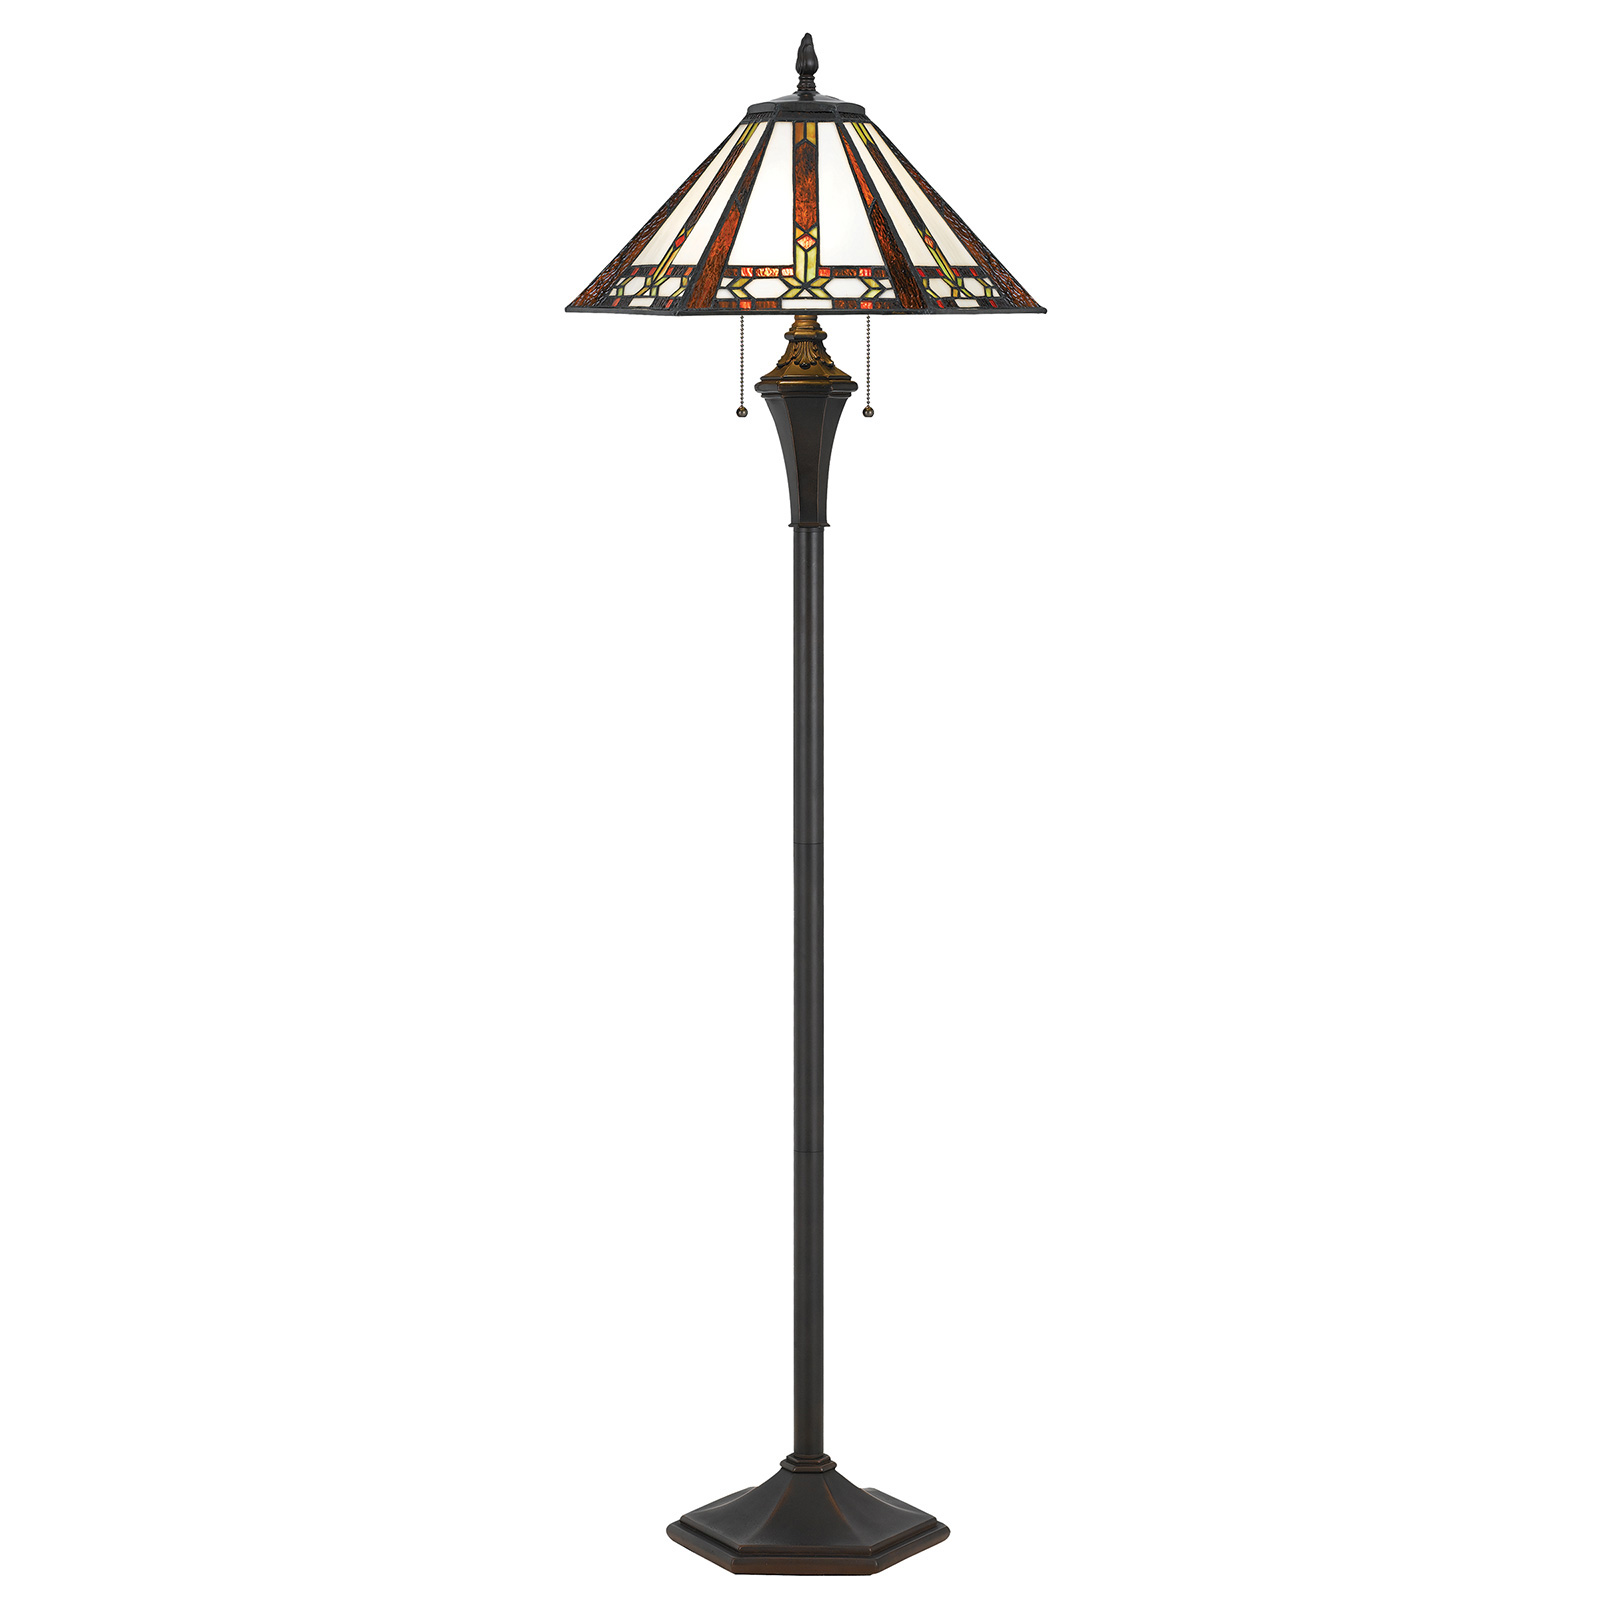 CAL BO-2717FL Floor Lamp, 110 to 120 V, 120 W, 2-Lamp, Incandescent Lamp, Resin - 1